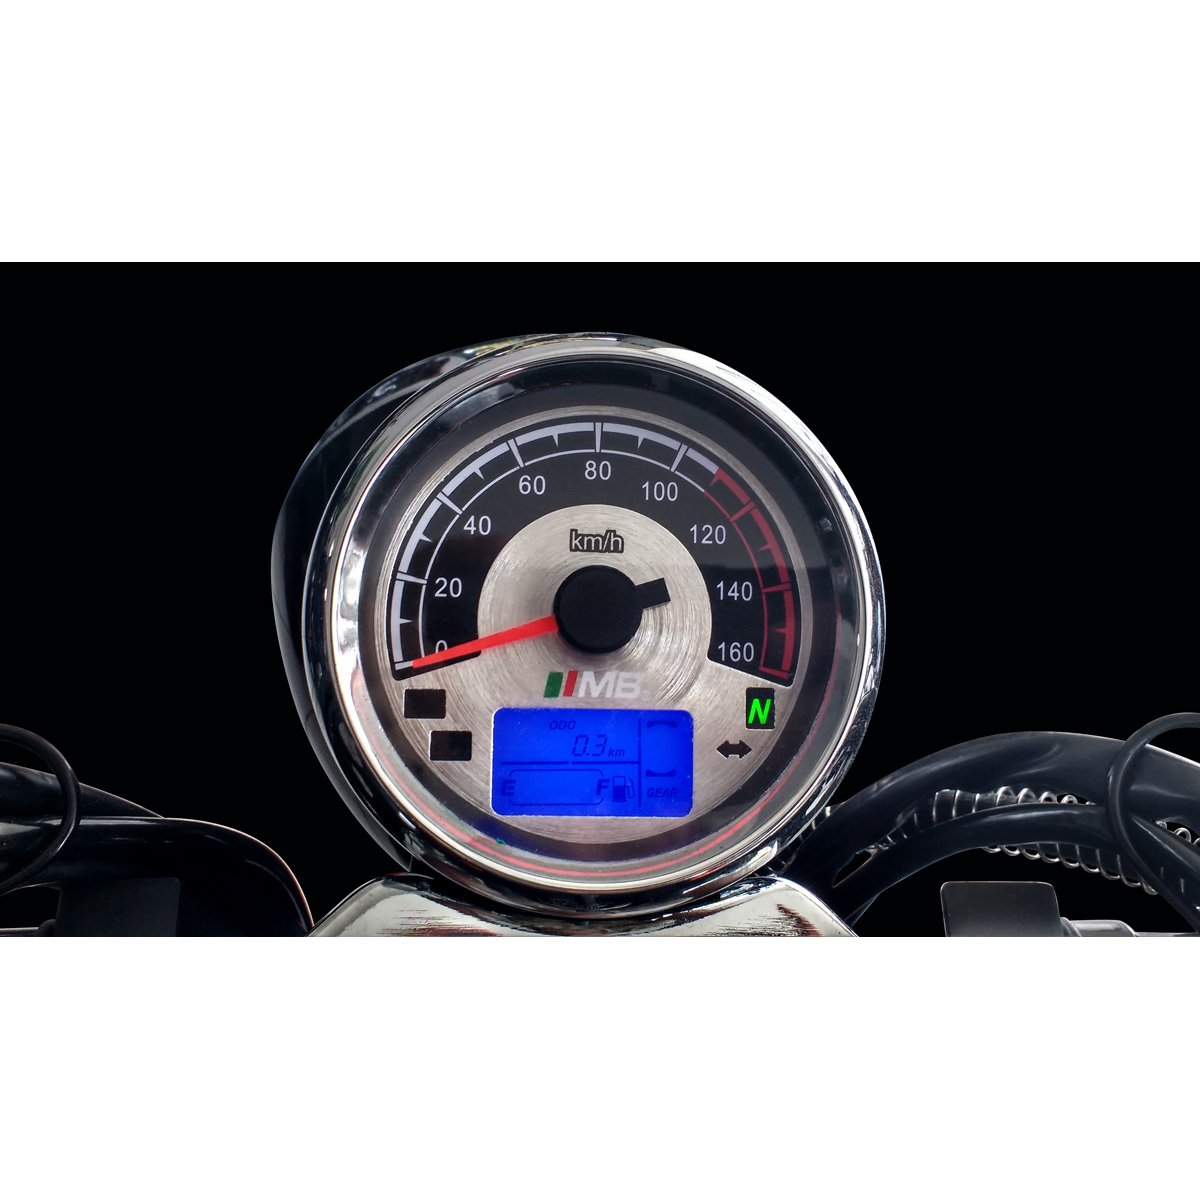 Motocicleta Est&aacute;ndar Black Devil 250 Cc Mb